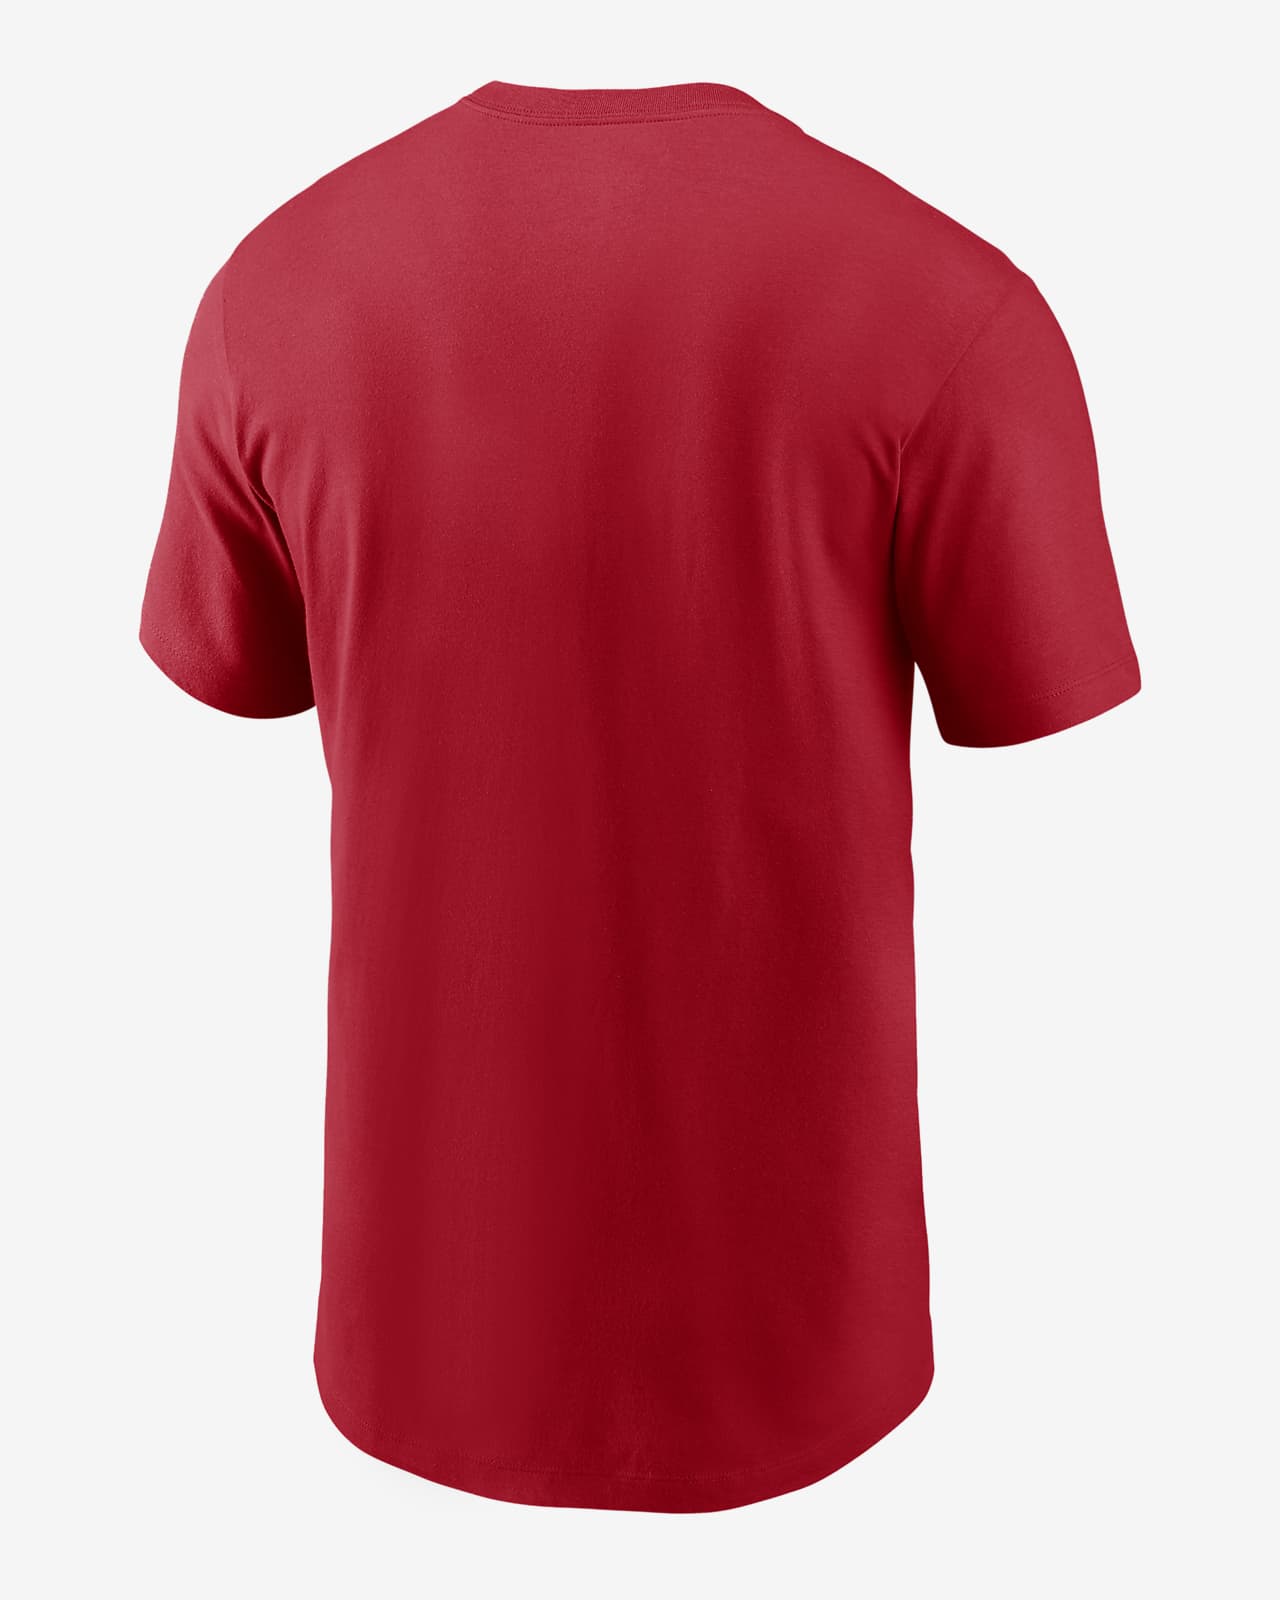 MLB Atlanta Braves Men's Short Sleeve Polo T-Shirt - S